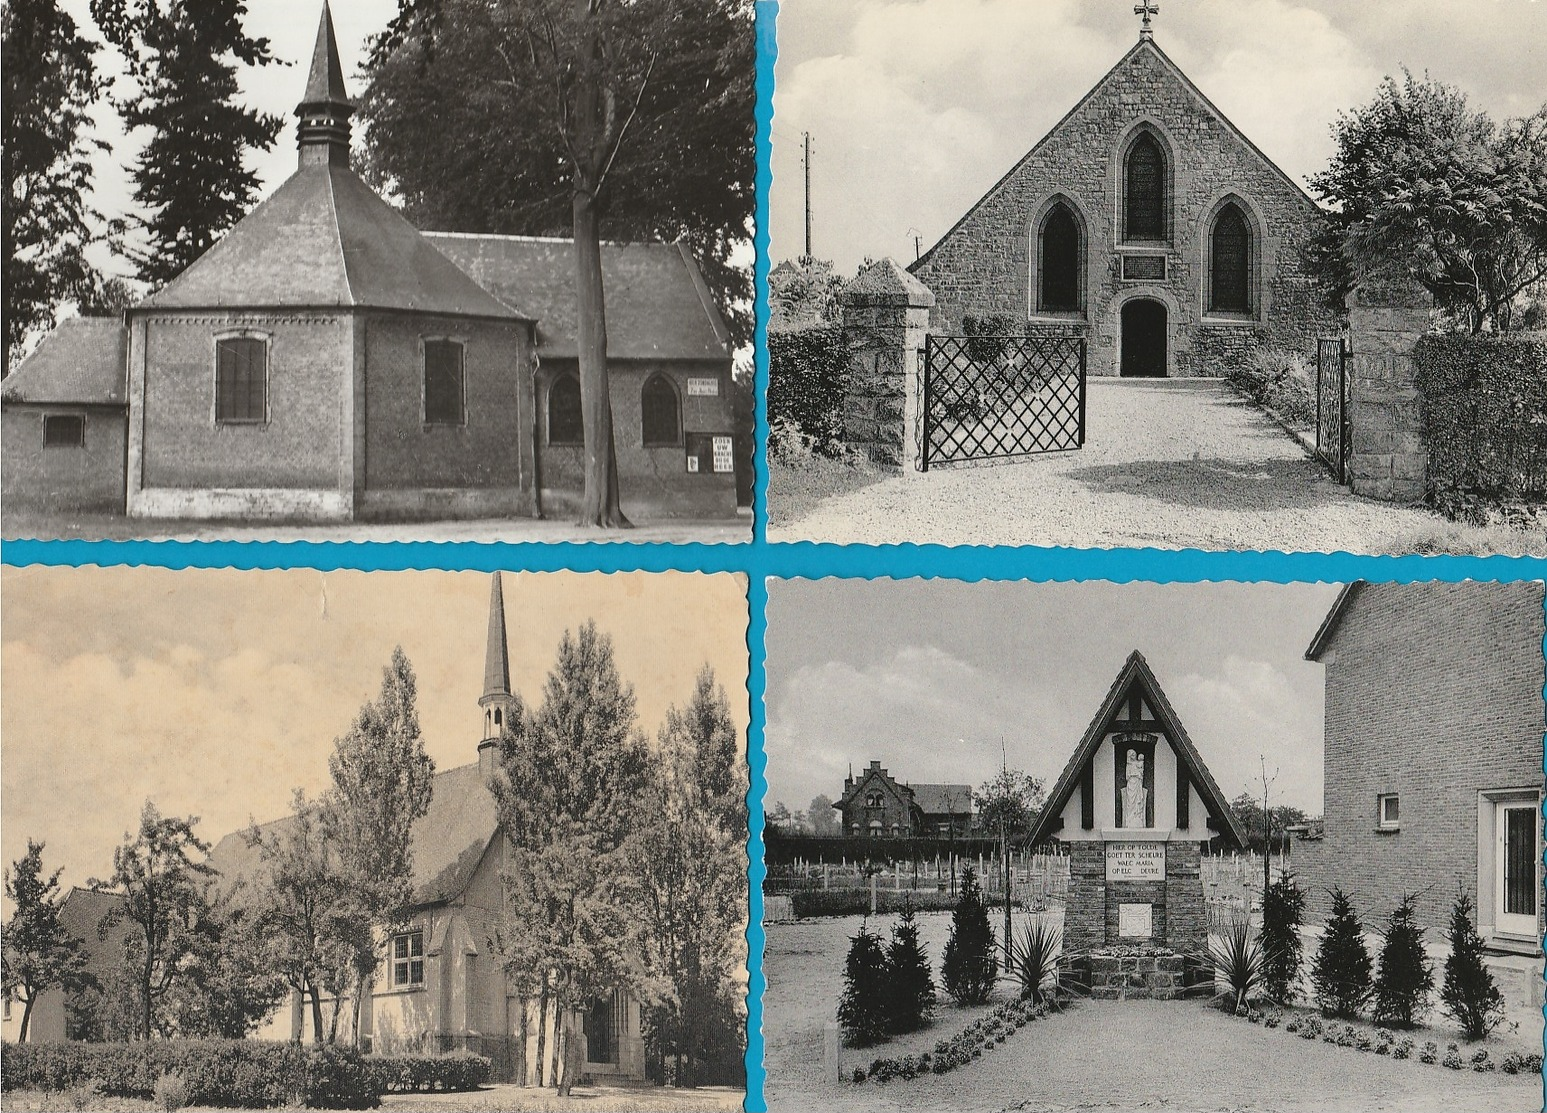 BELGIË Kerken, Kapellen, Eglises, Chapelles, Lot van 60 postkaarten, 60 cartes postales